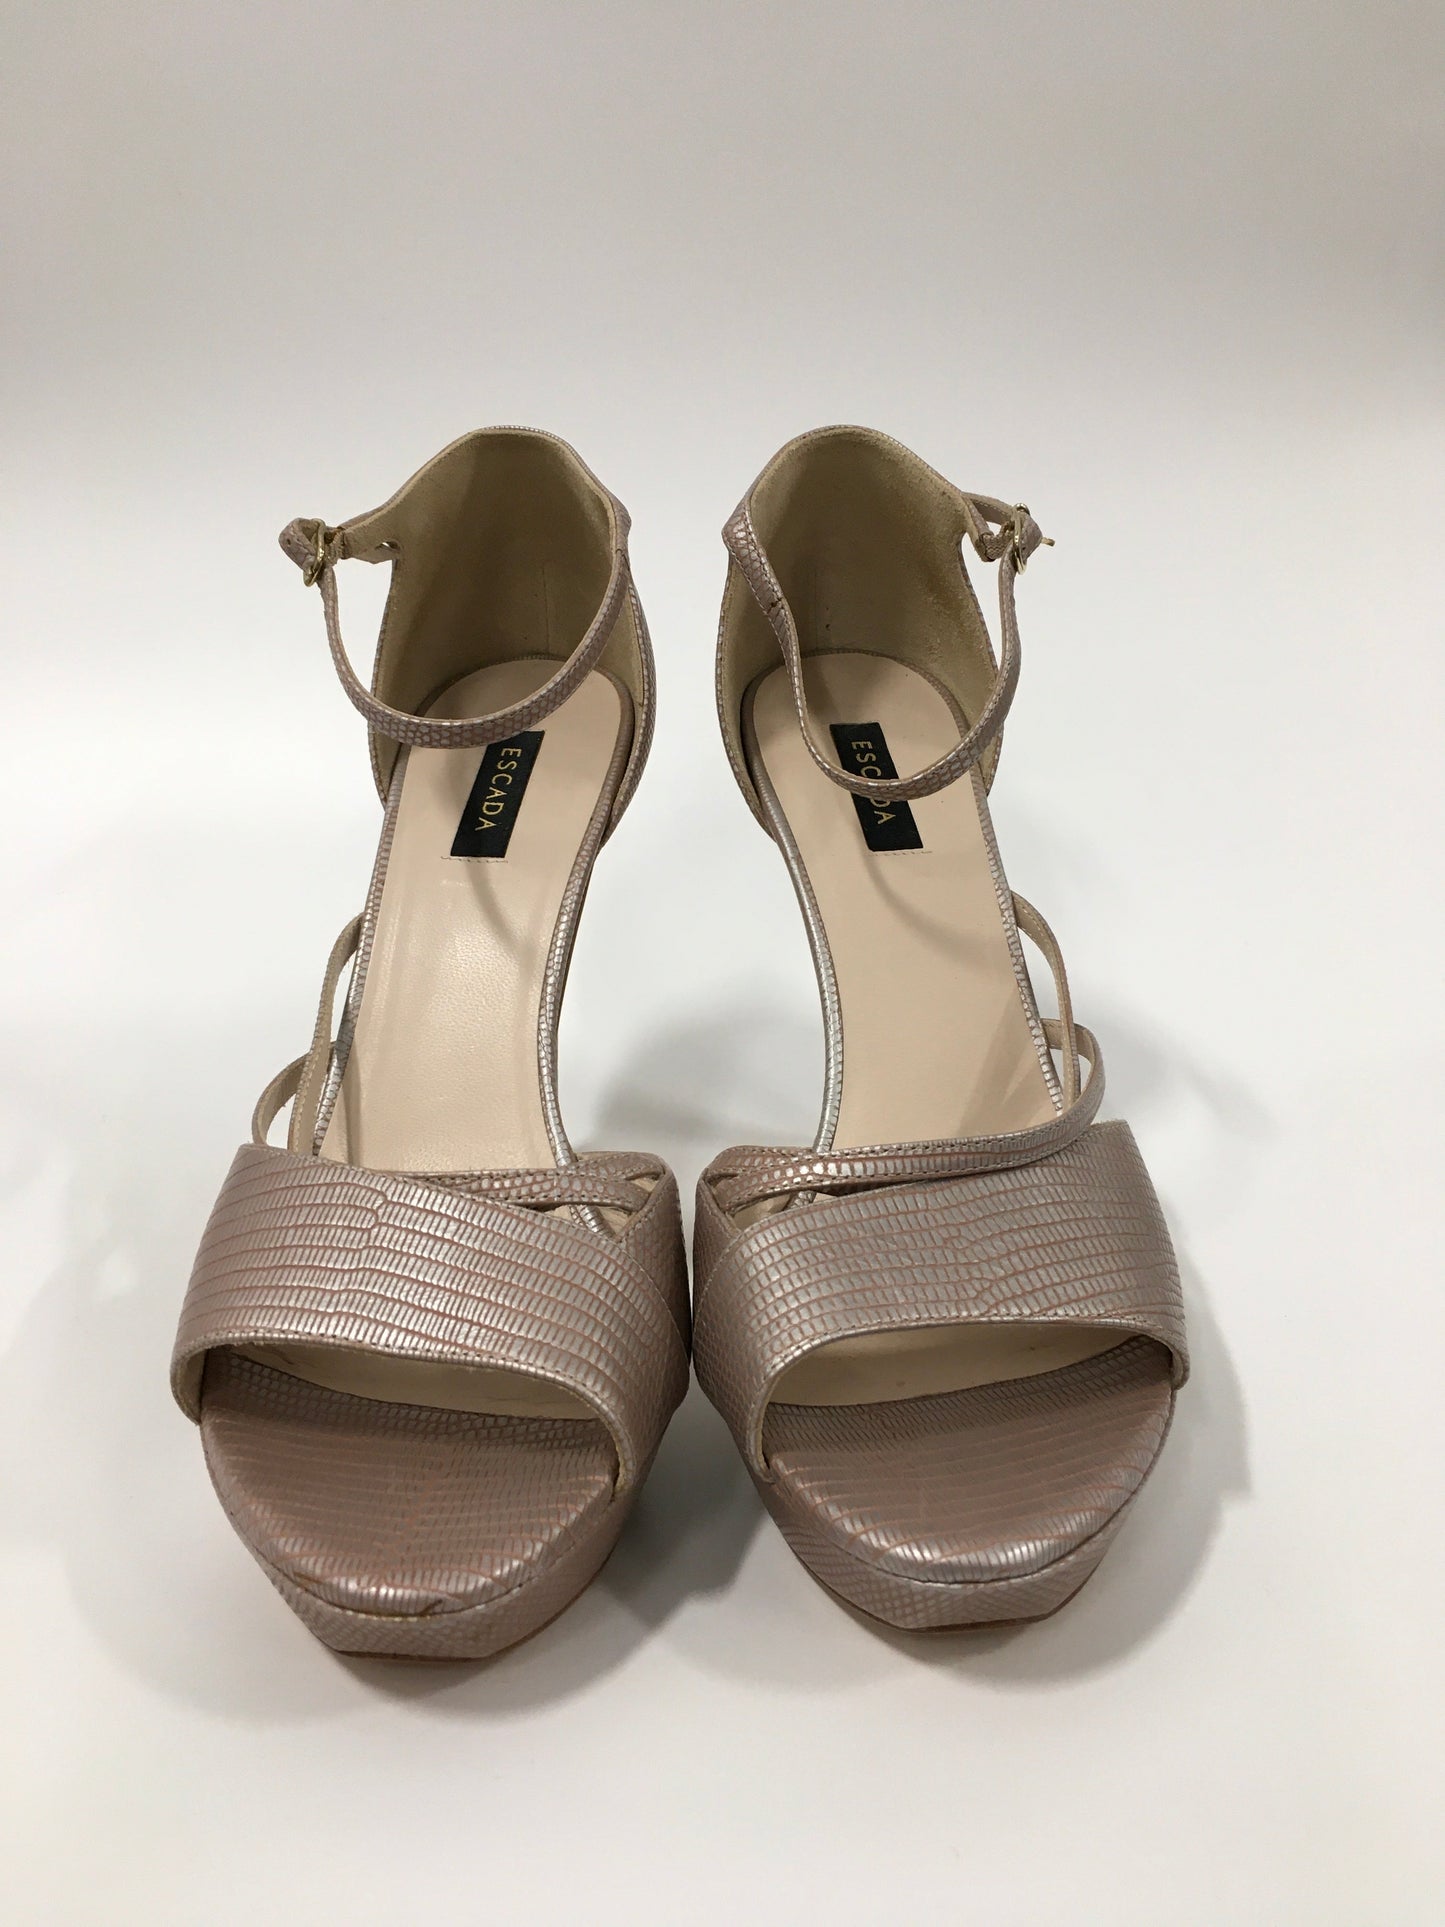 Shoes Heels Stiletto By Escada  Size: 9.5